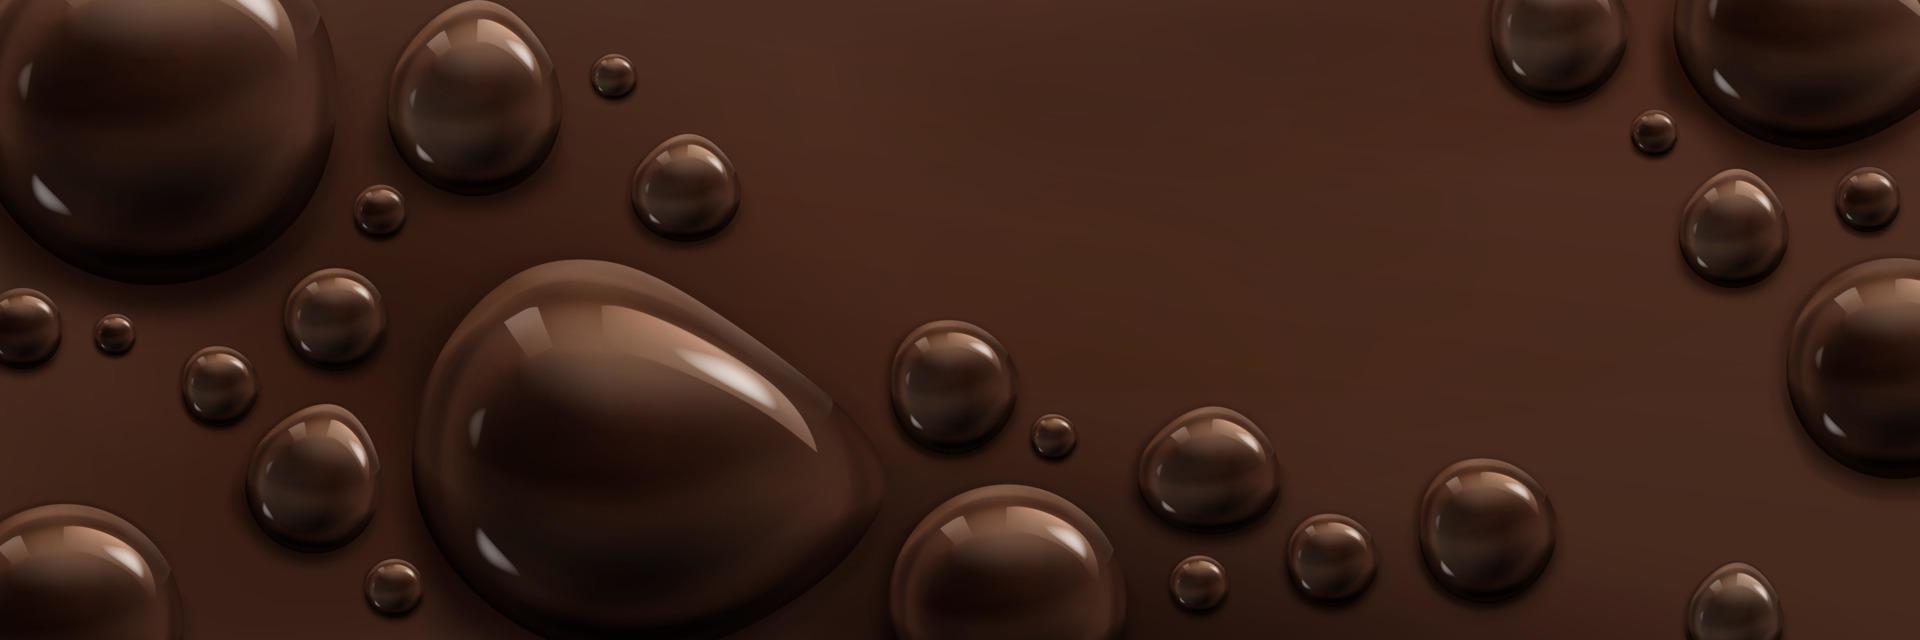 Realistic liquid chocolate background vector